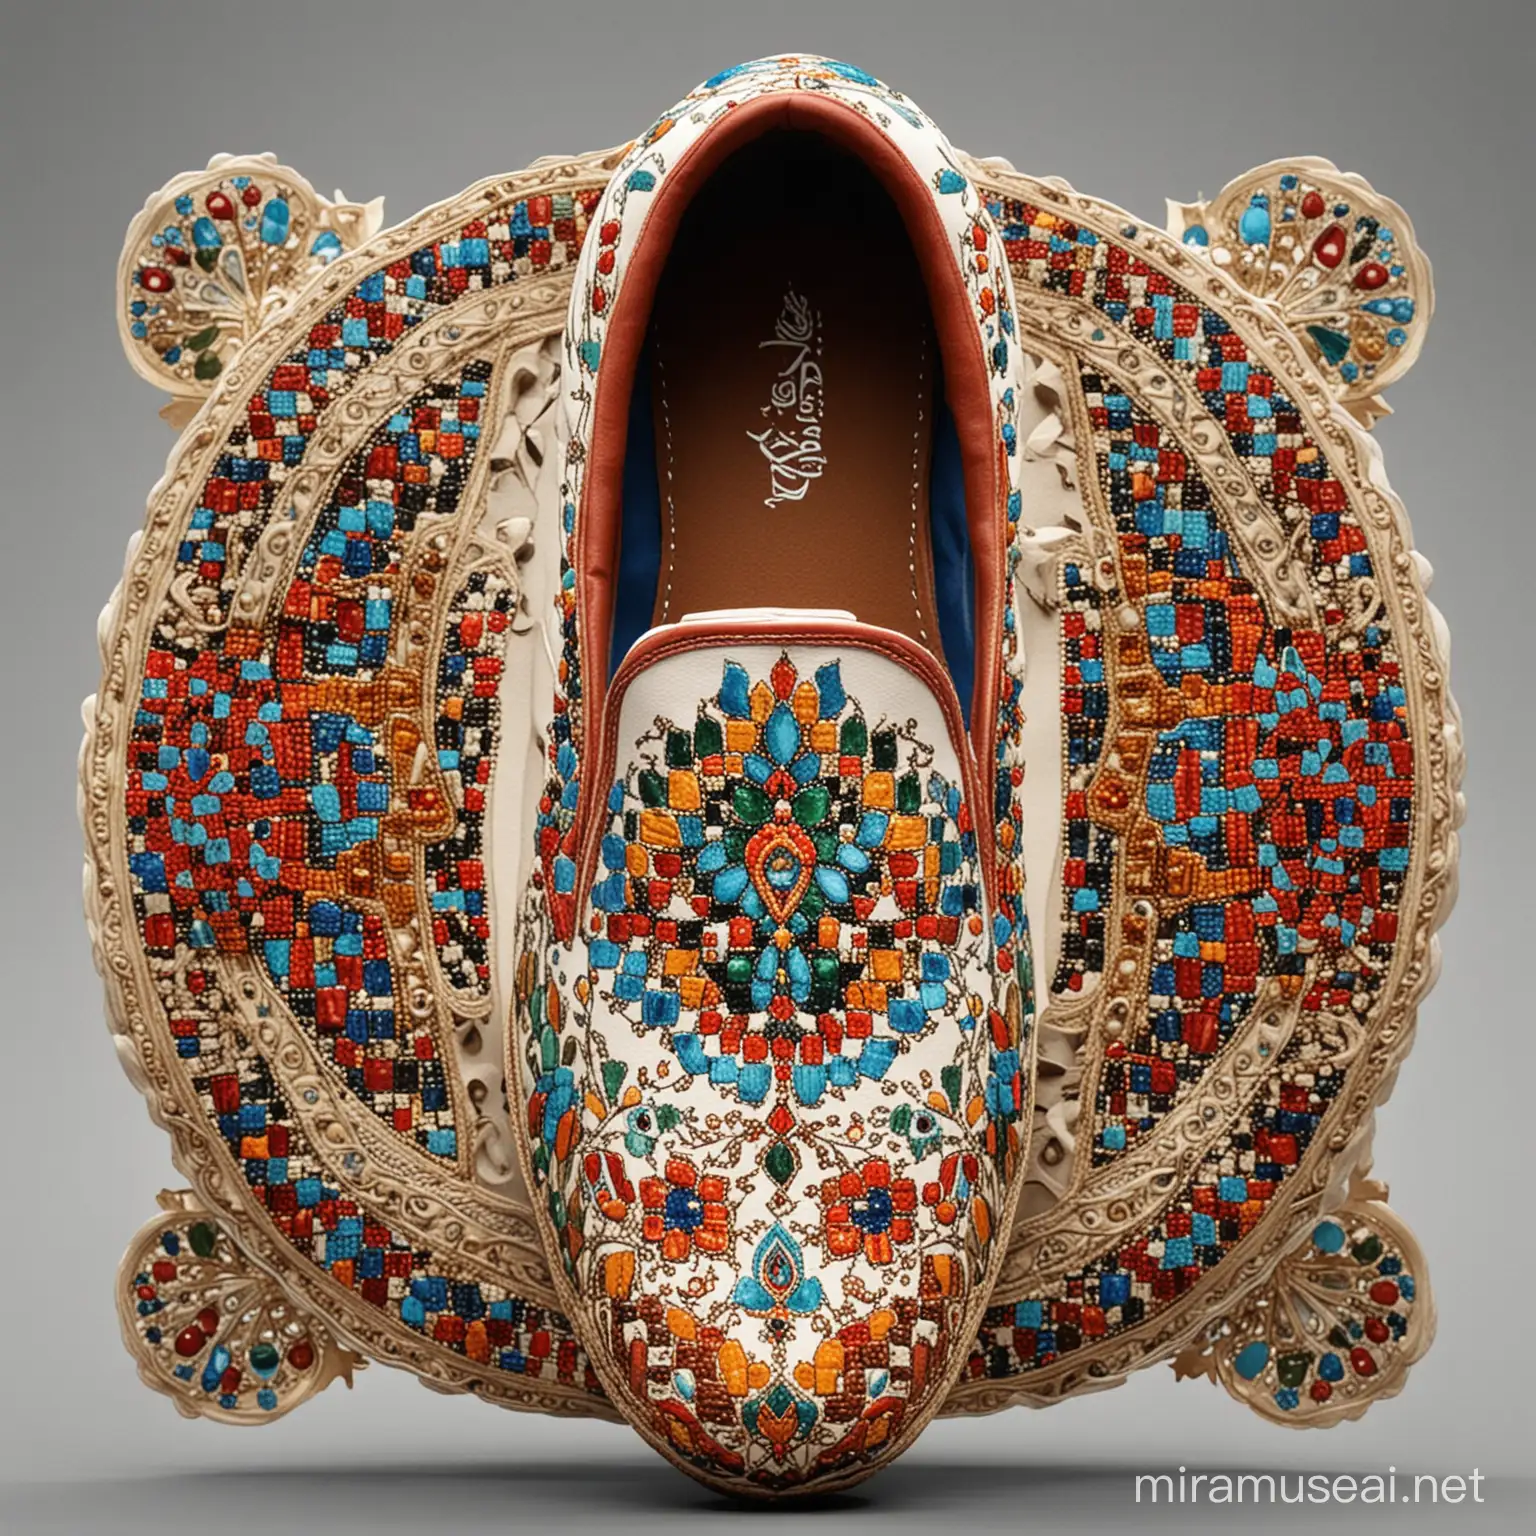 Turkish CultureInspired Shoe Design Featuring Mevlana and Konya Province